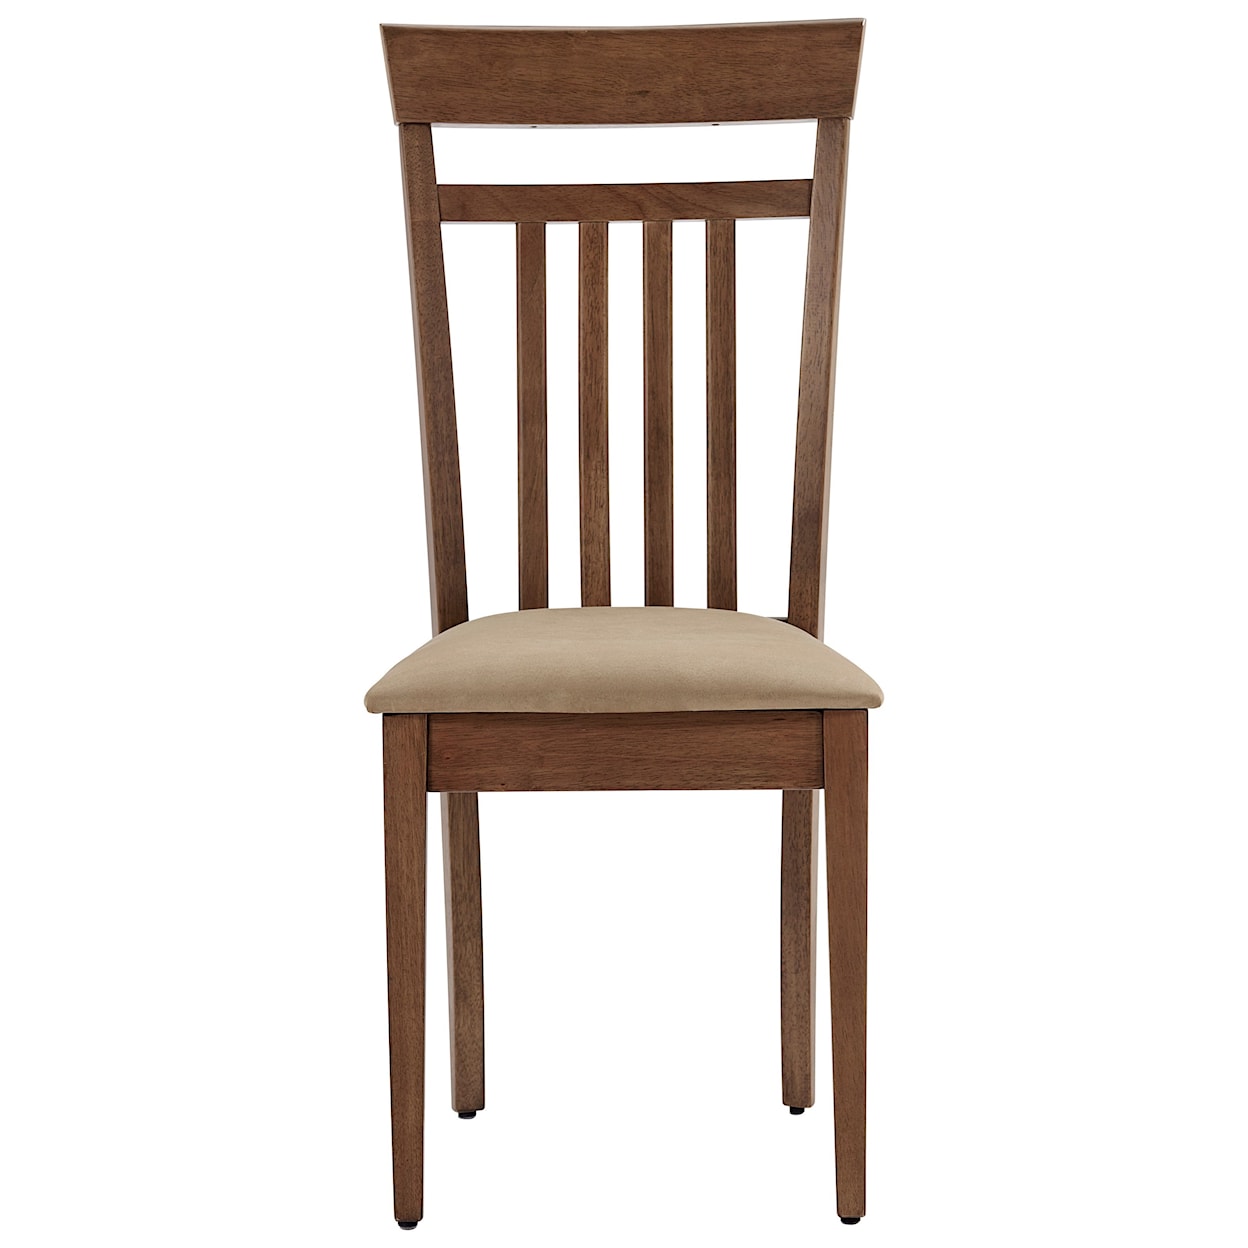 Progressive Furniture Palmer Upholstered Dining Side Chair